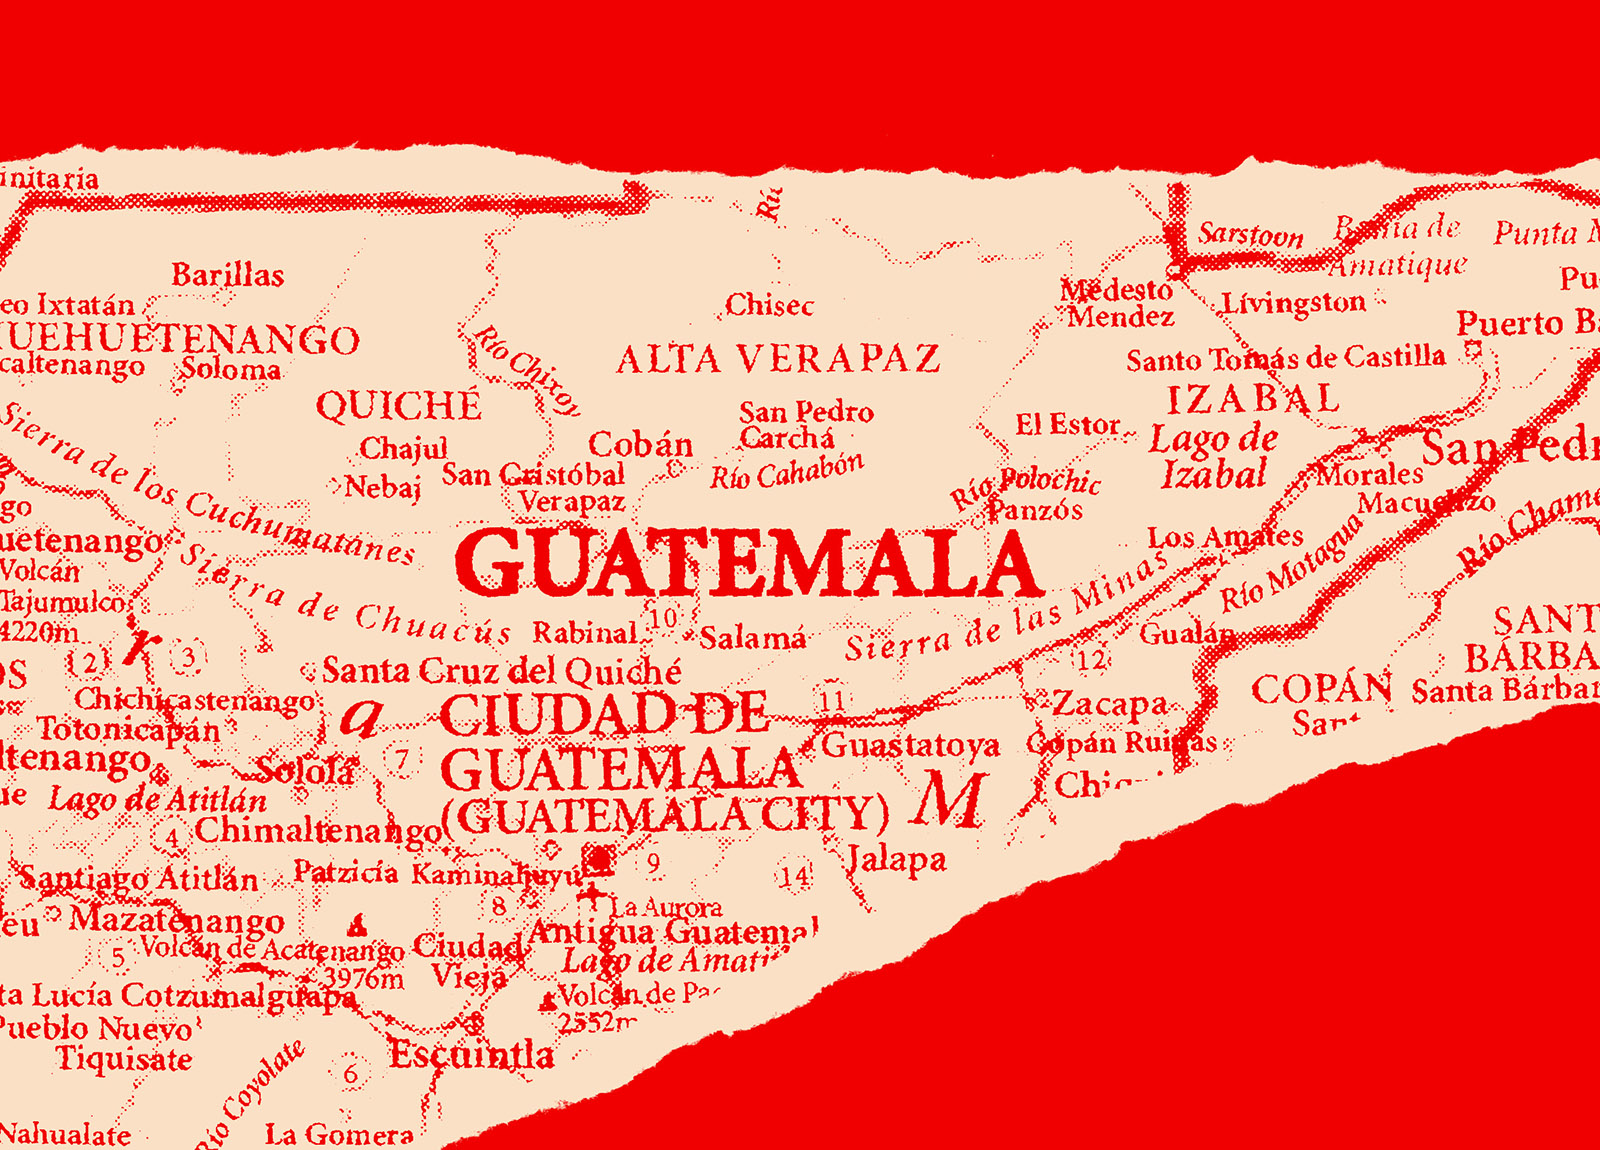 https://newyorkwarcrimes.com/media/pages/guatemala-1954/20f9b27f76-1709843976/history-guatemala-header.jpg